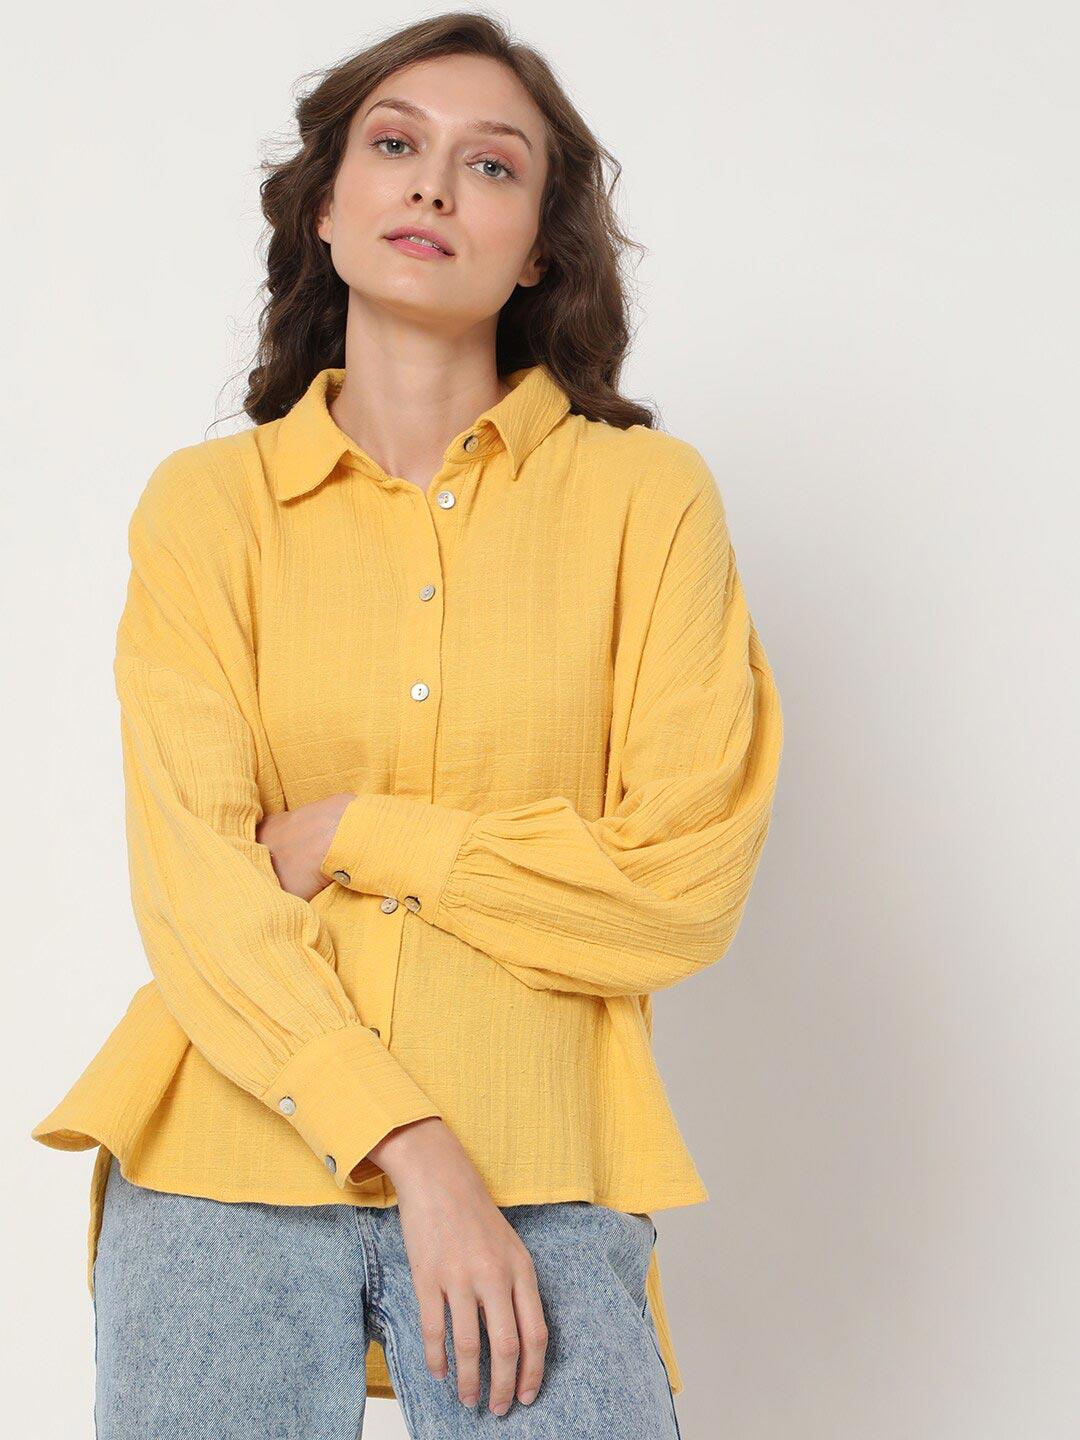 Vero Moda Women Yellow Casual Shirt